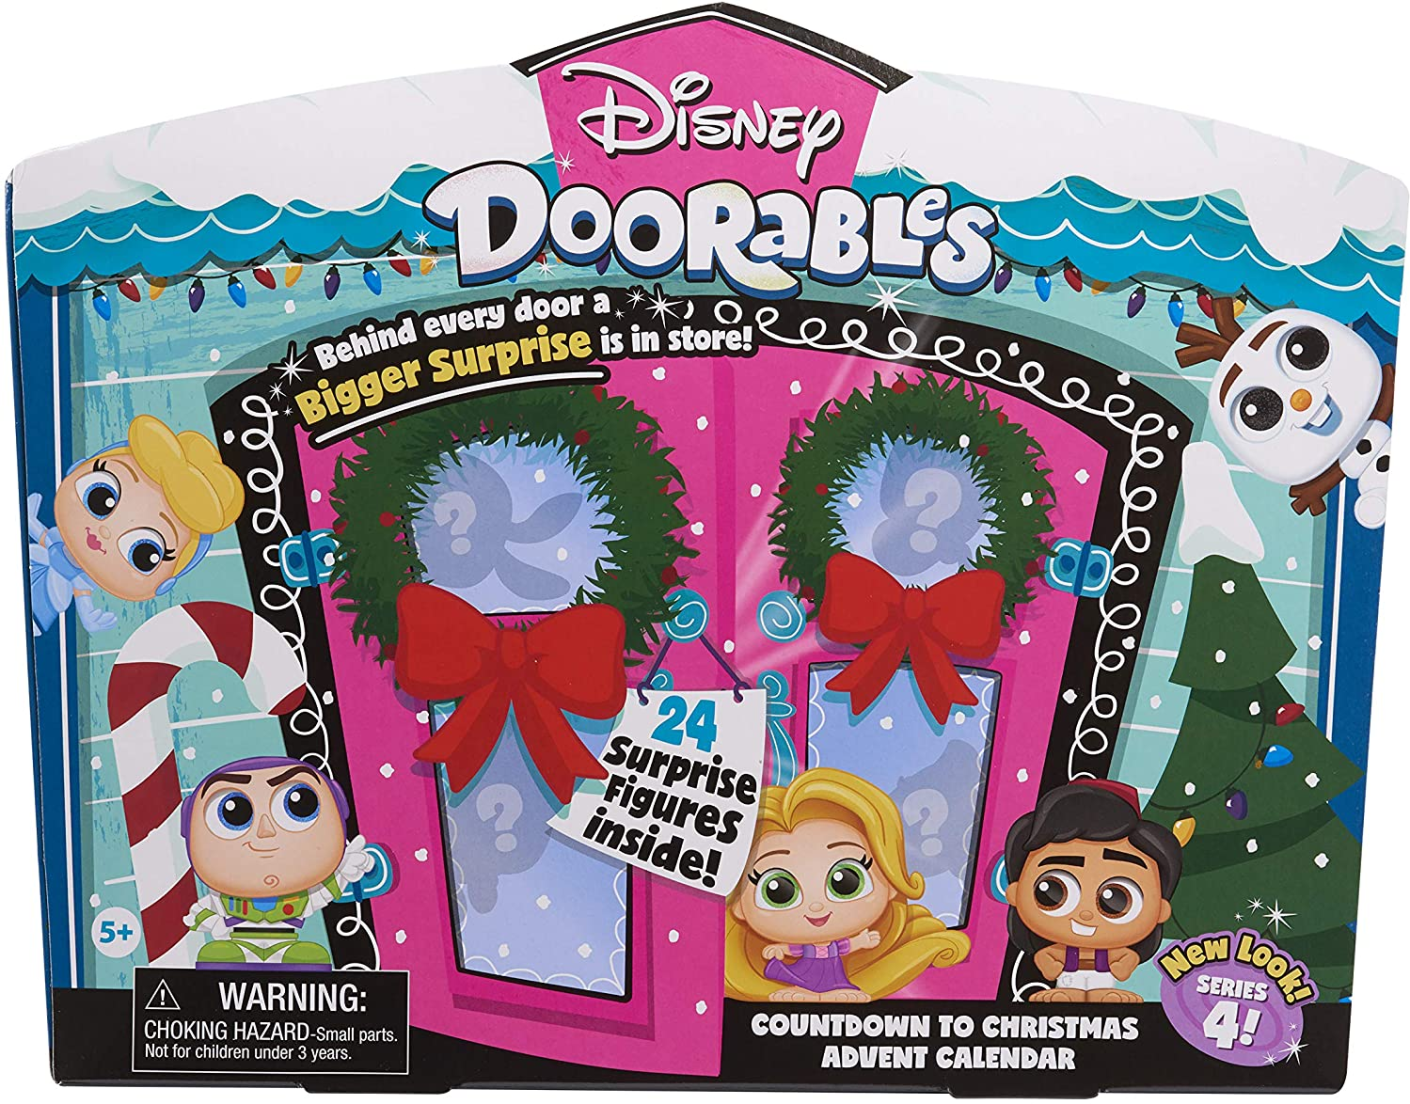 2020 Disney Doorables Advent Calendar Available Now! Hello Subscription